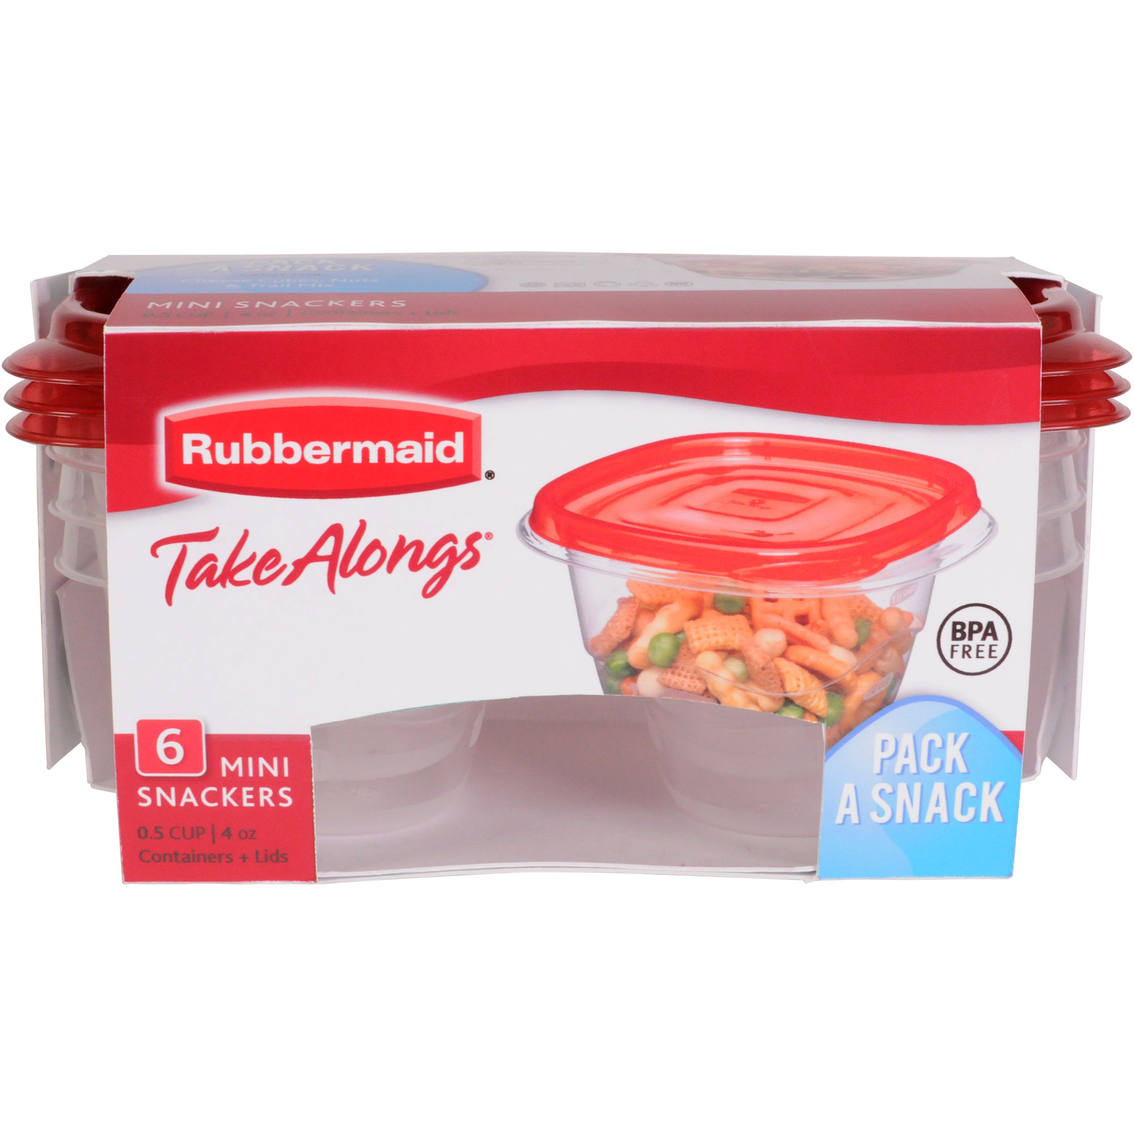 Rubbermaid .5 Cup Takealongs 6 Pk., Food Storage